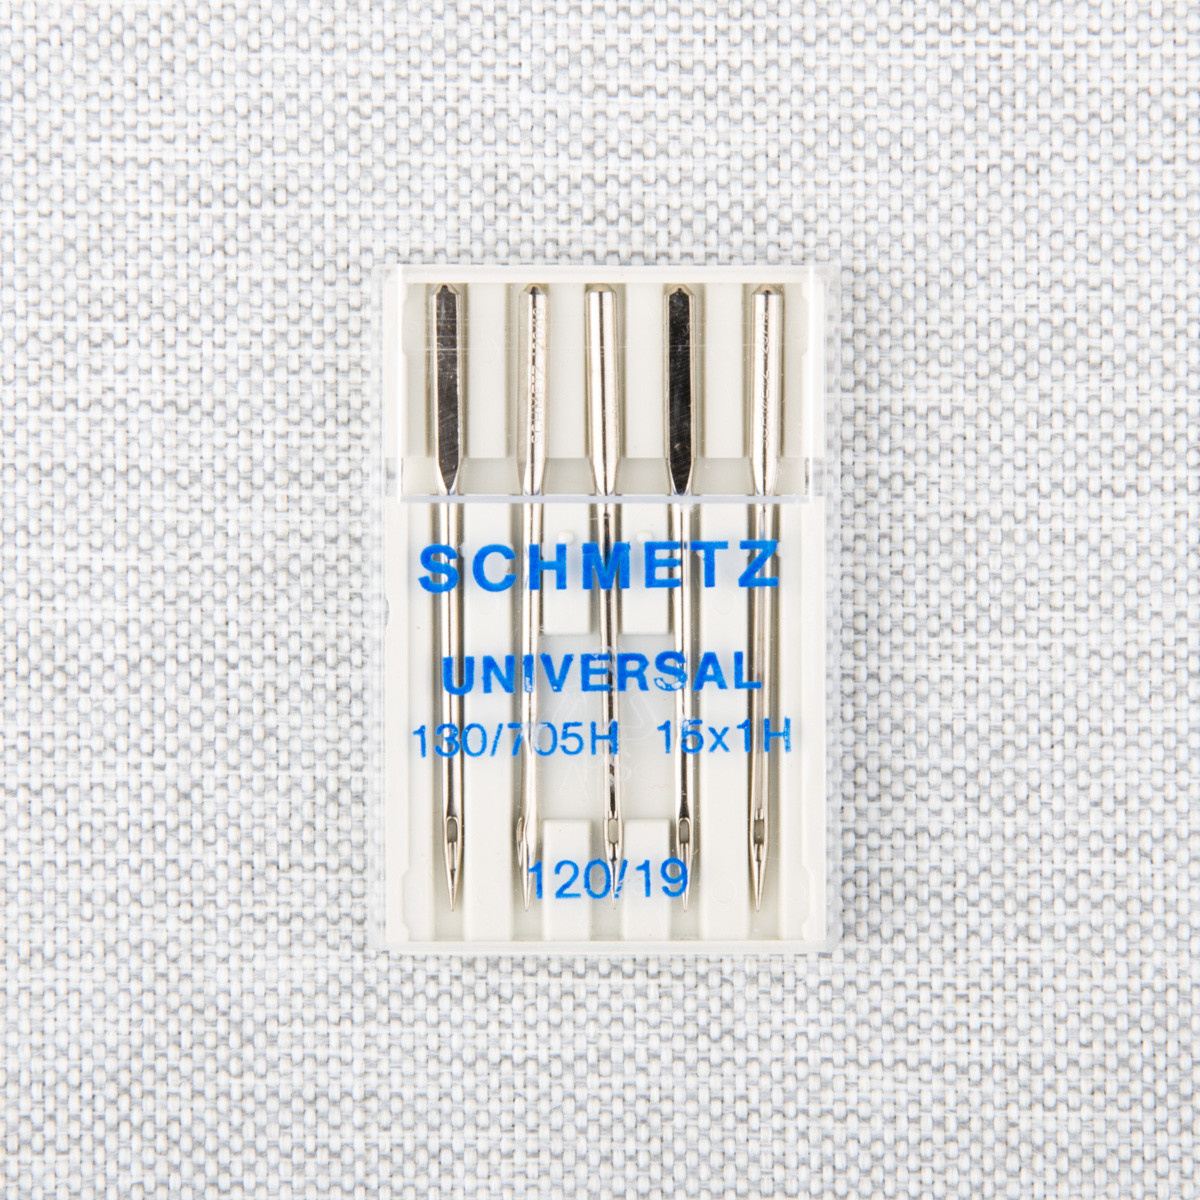 Schmetz Schmetz #1779 universal needles carded - 120/19 - 5 count